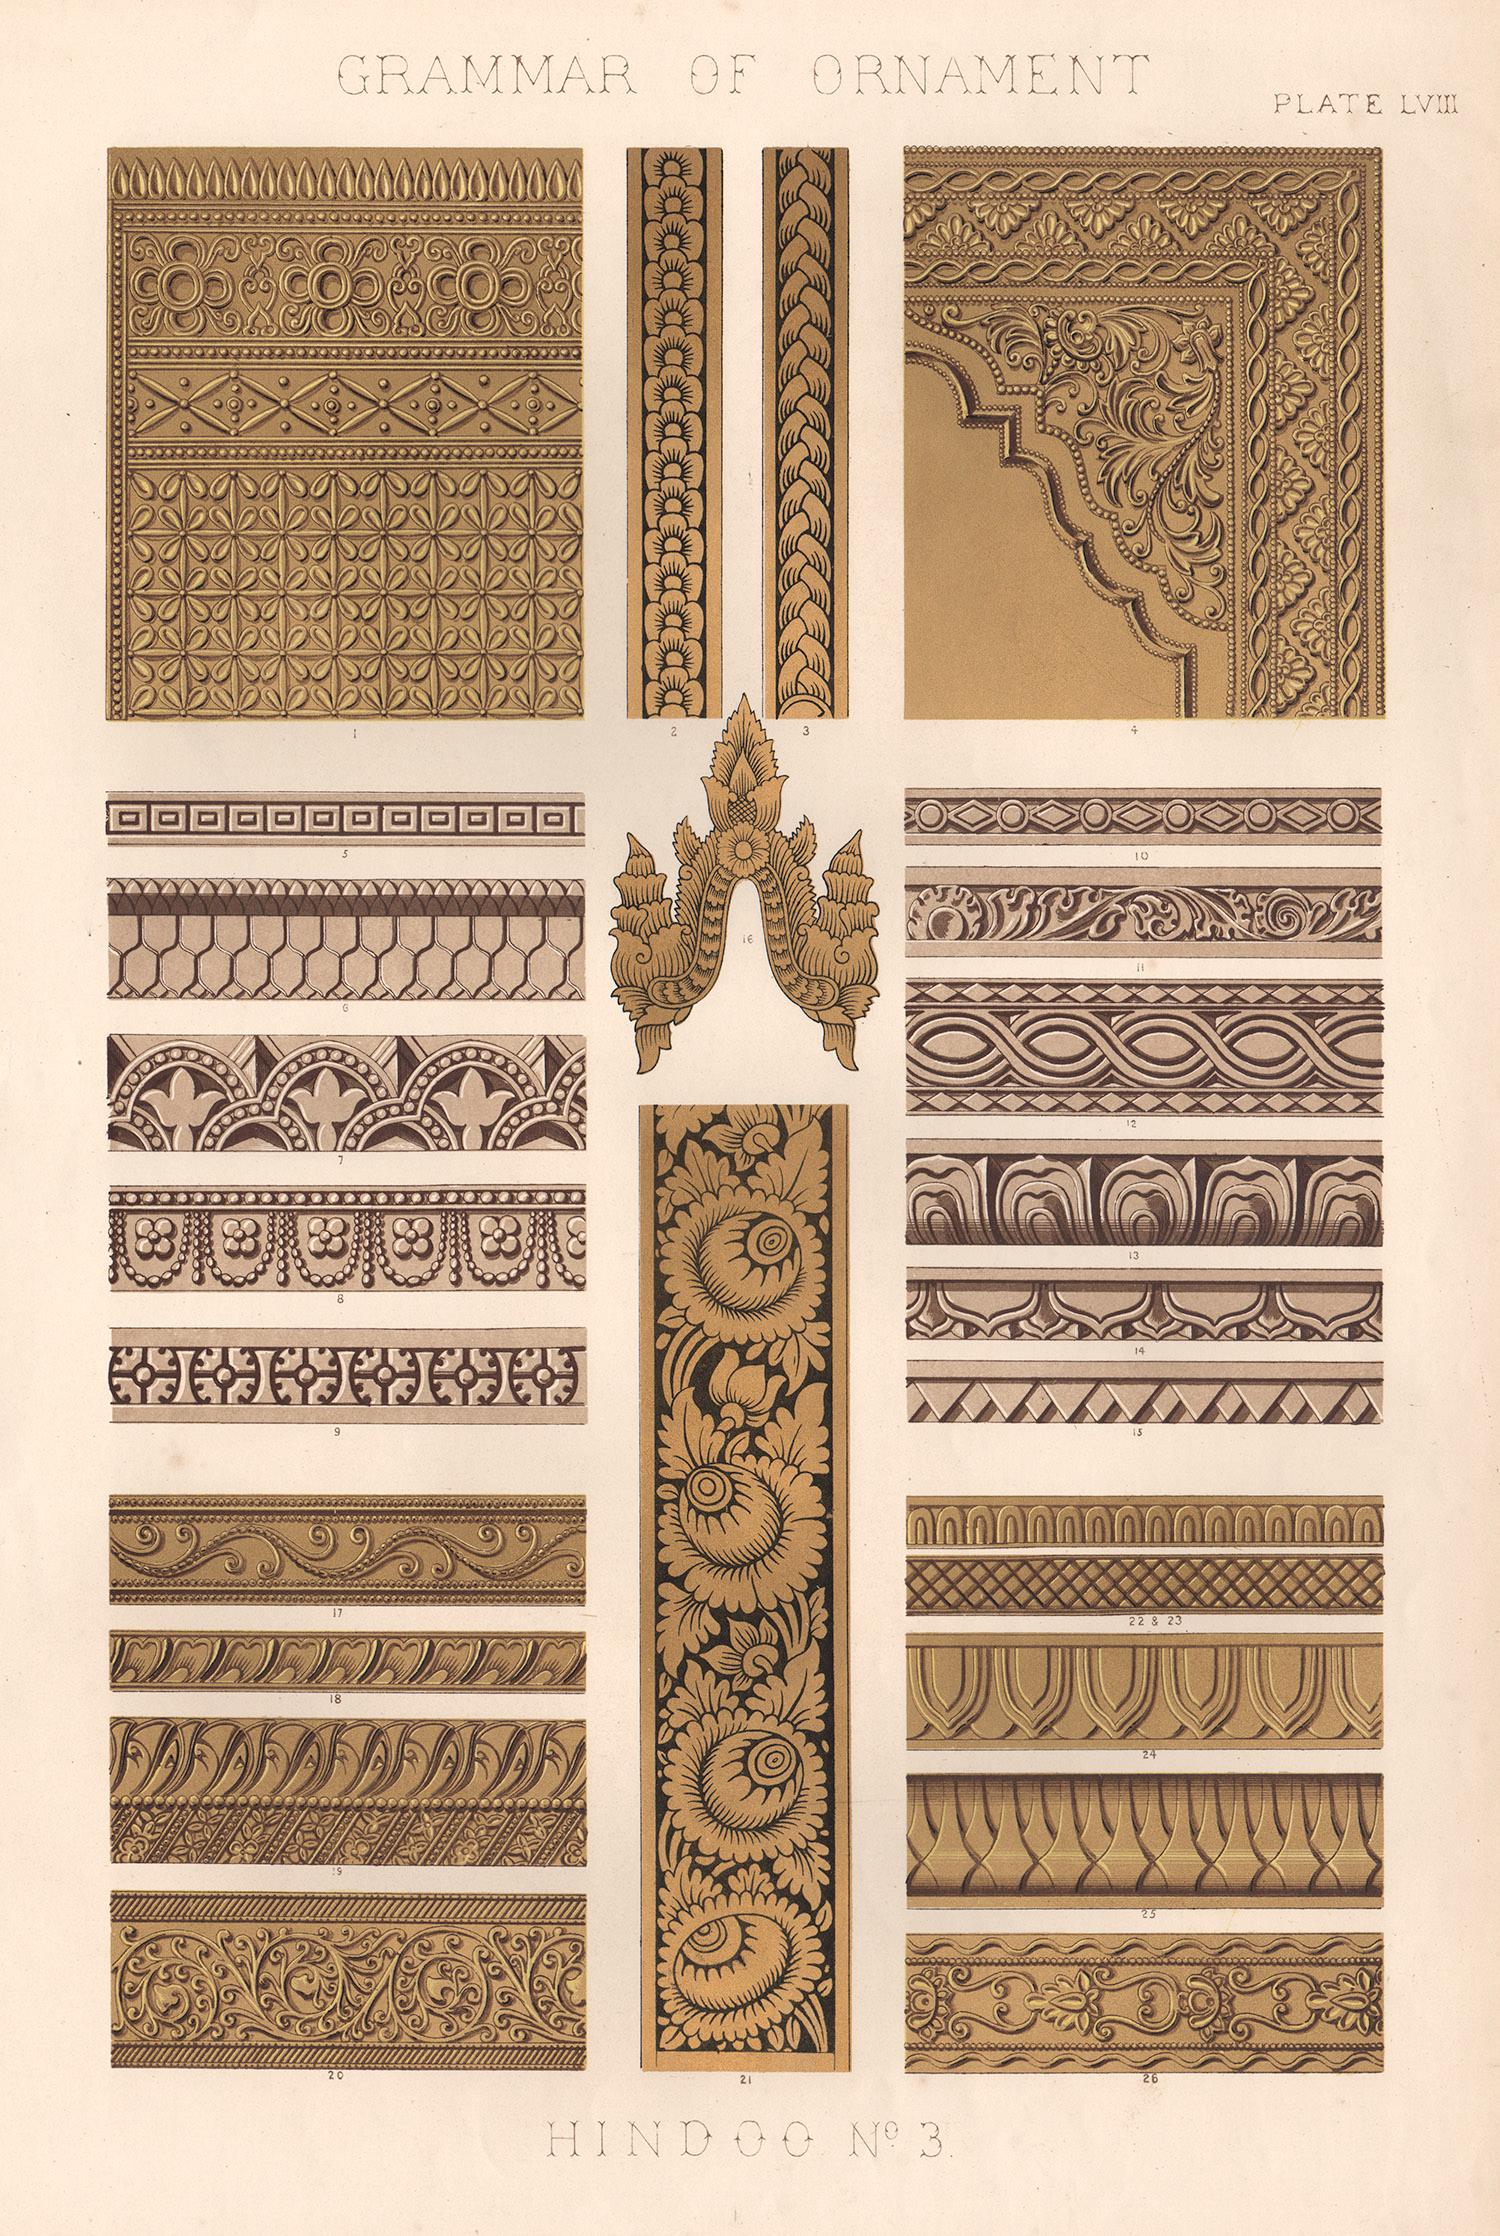 Hindoo Nr. 3, Grammar of Ornament, Owen Jones, Ende des 19. Jahrhunderts, 1868